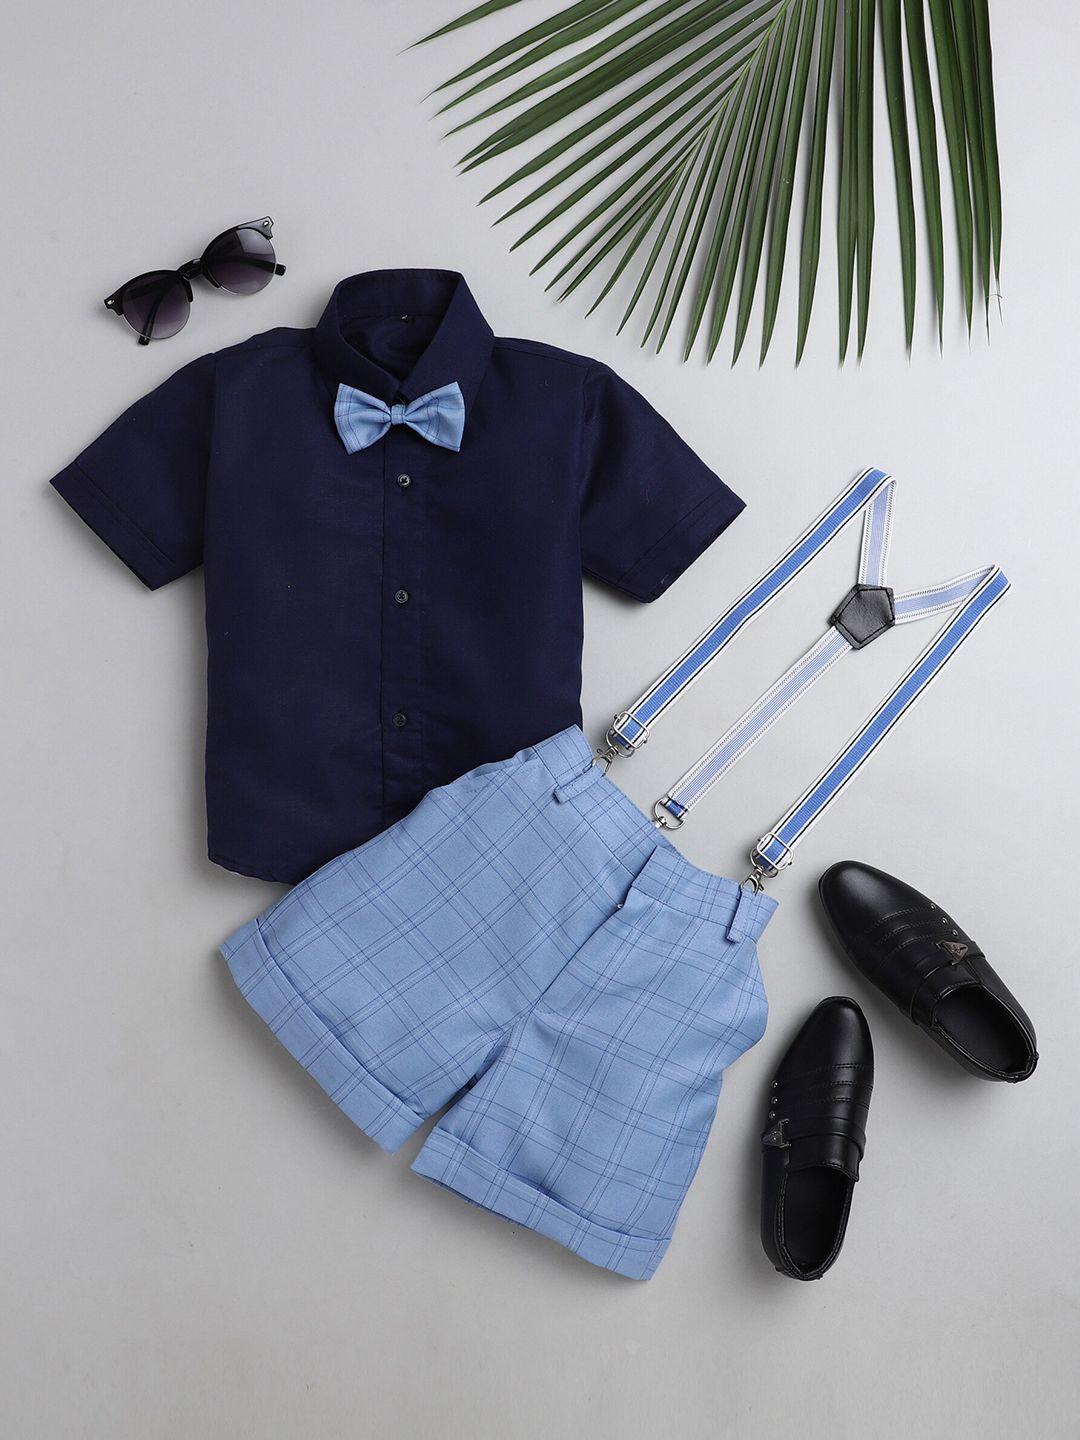 jeetethnics boys blue & navy blue shirt & shorts with suspenders